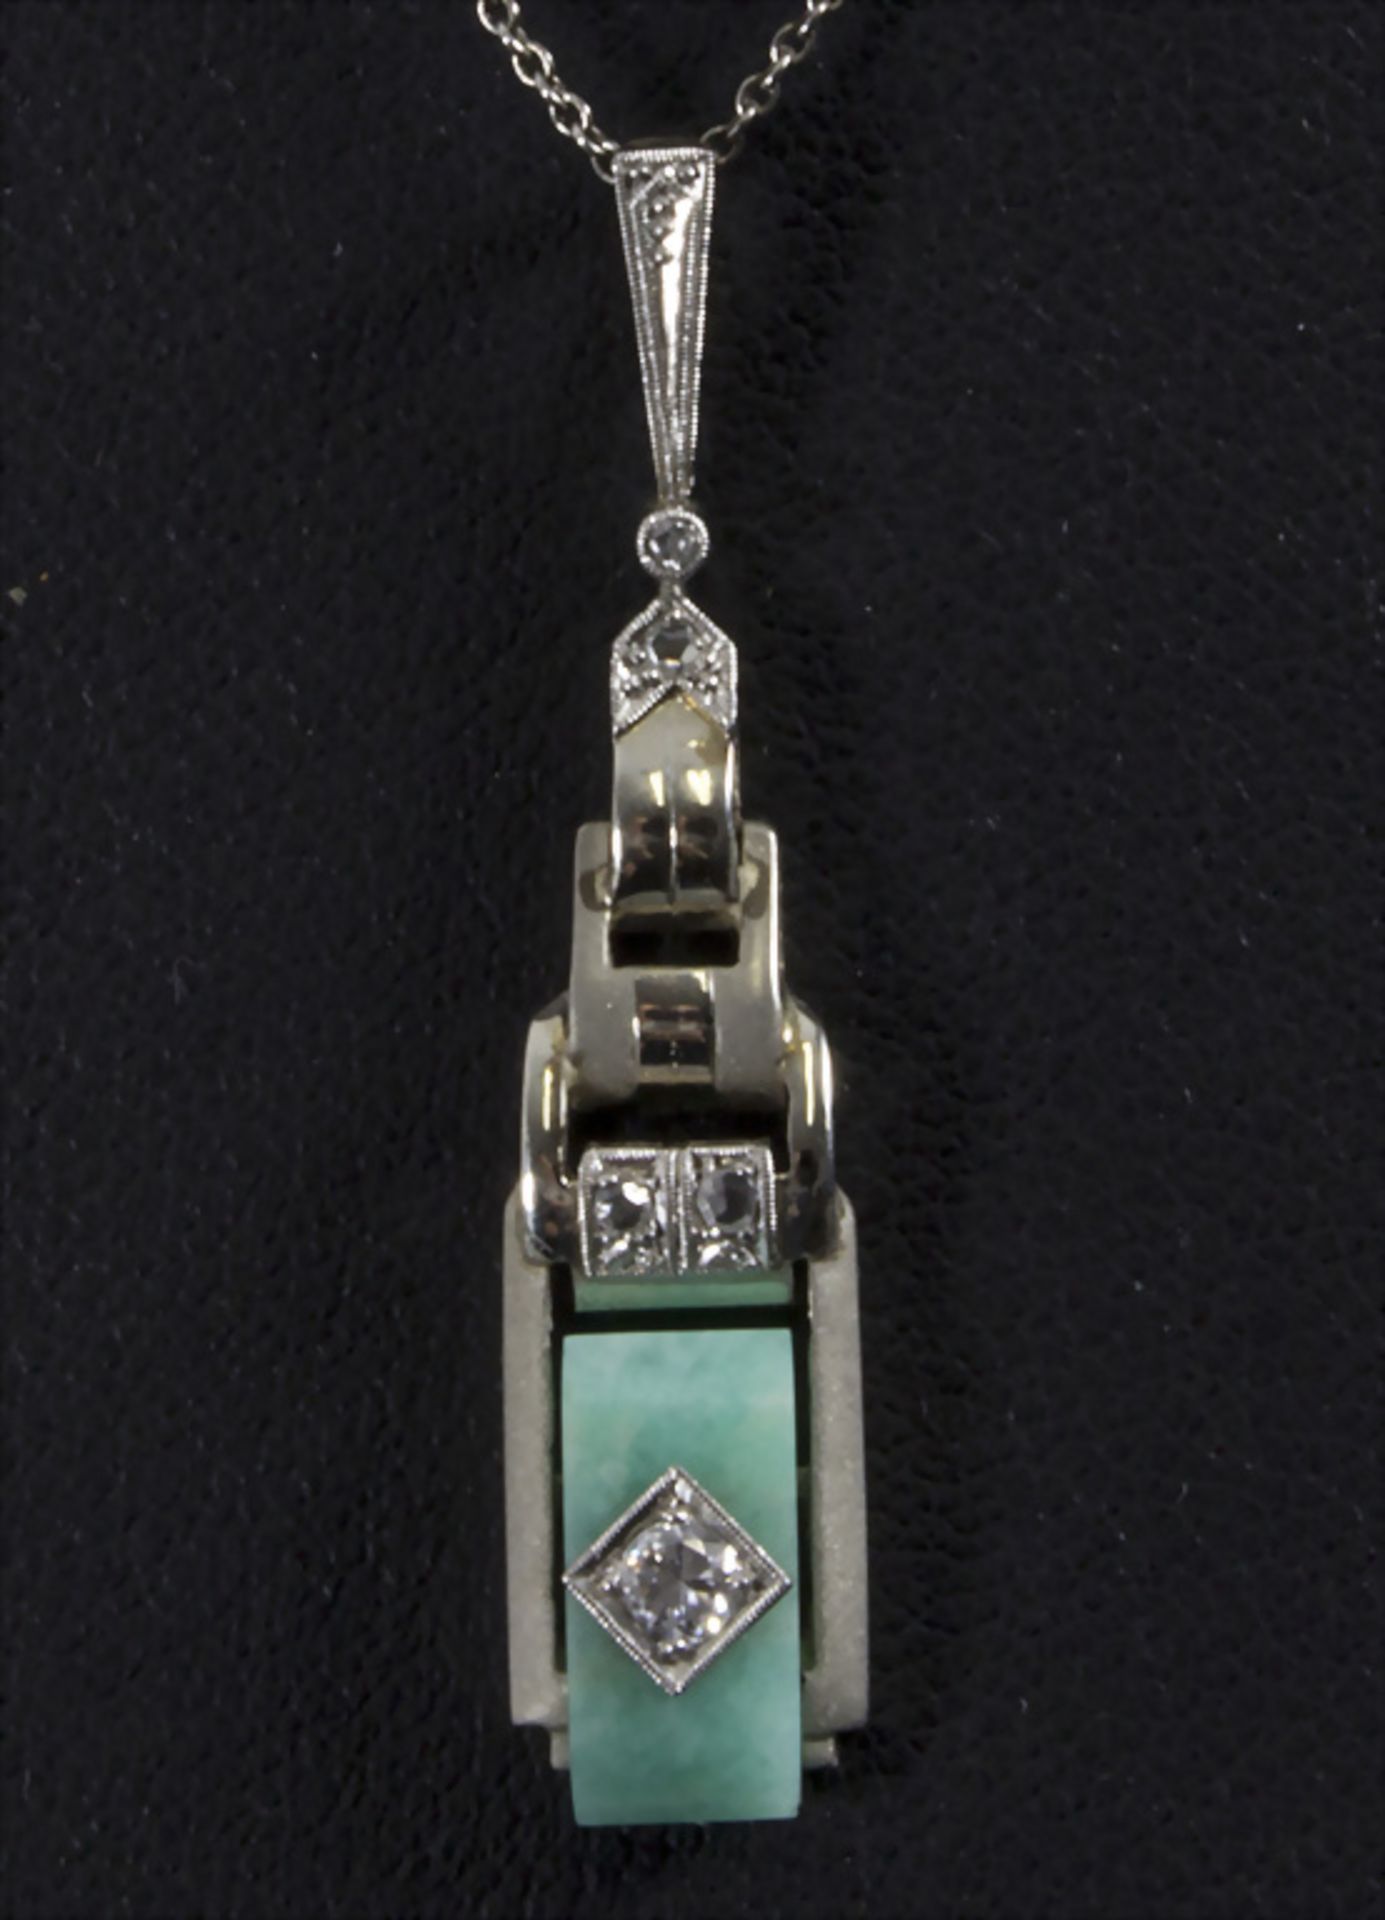 Jugendstil Goldkette mit Anhänger / An Art Nouveau 14ct gold necklace with pendant with diamond